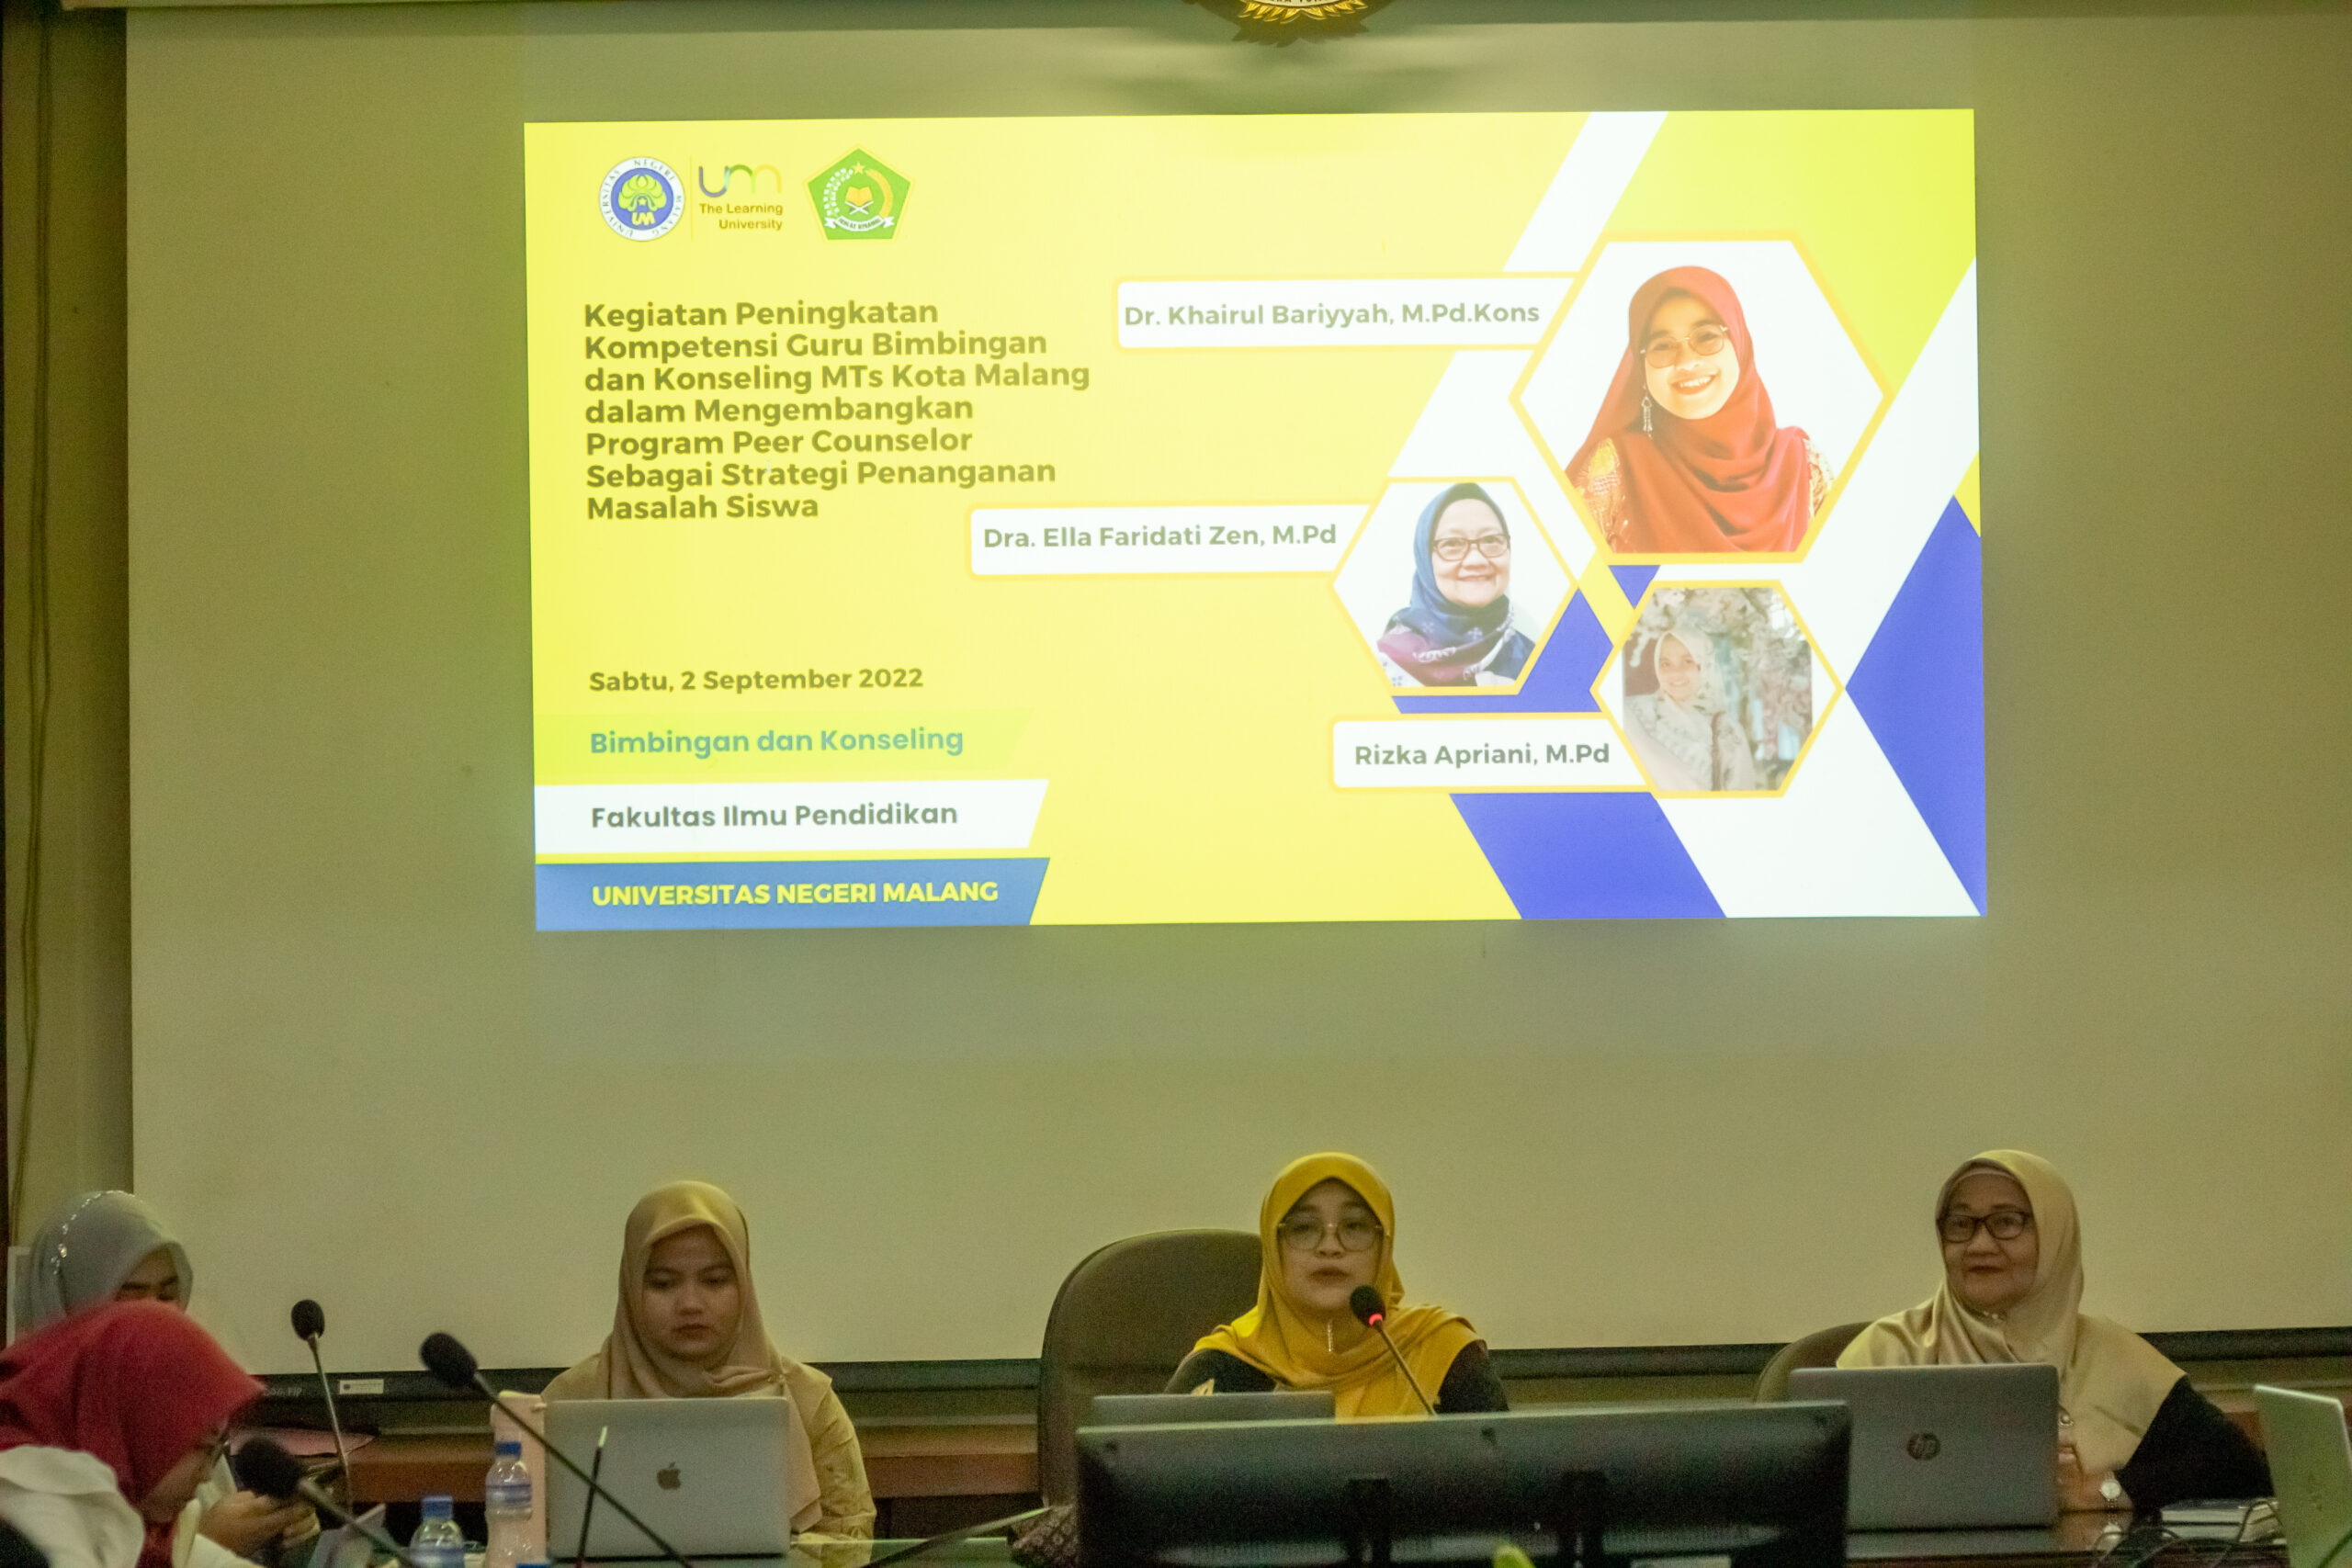 Upayakan SDGs Dosen BK Universitas Negeri Malang Membantu Guru BK MTs Kota Malang Membentuk Teman Cermad (Teman Cerita Madrasah)